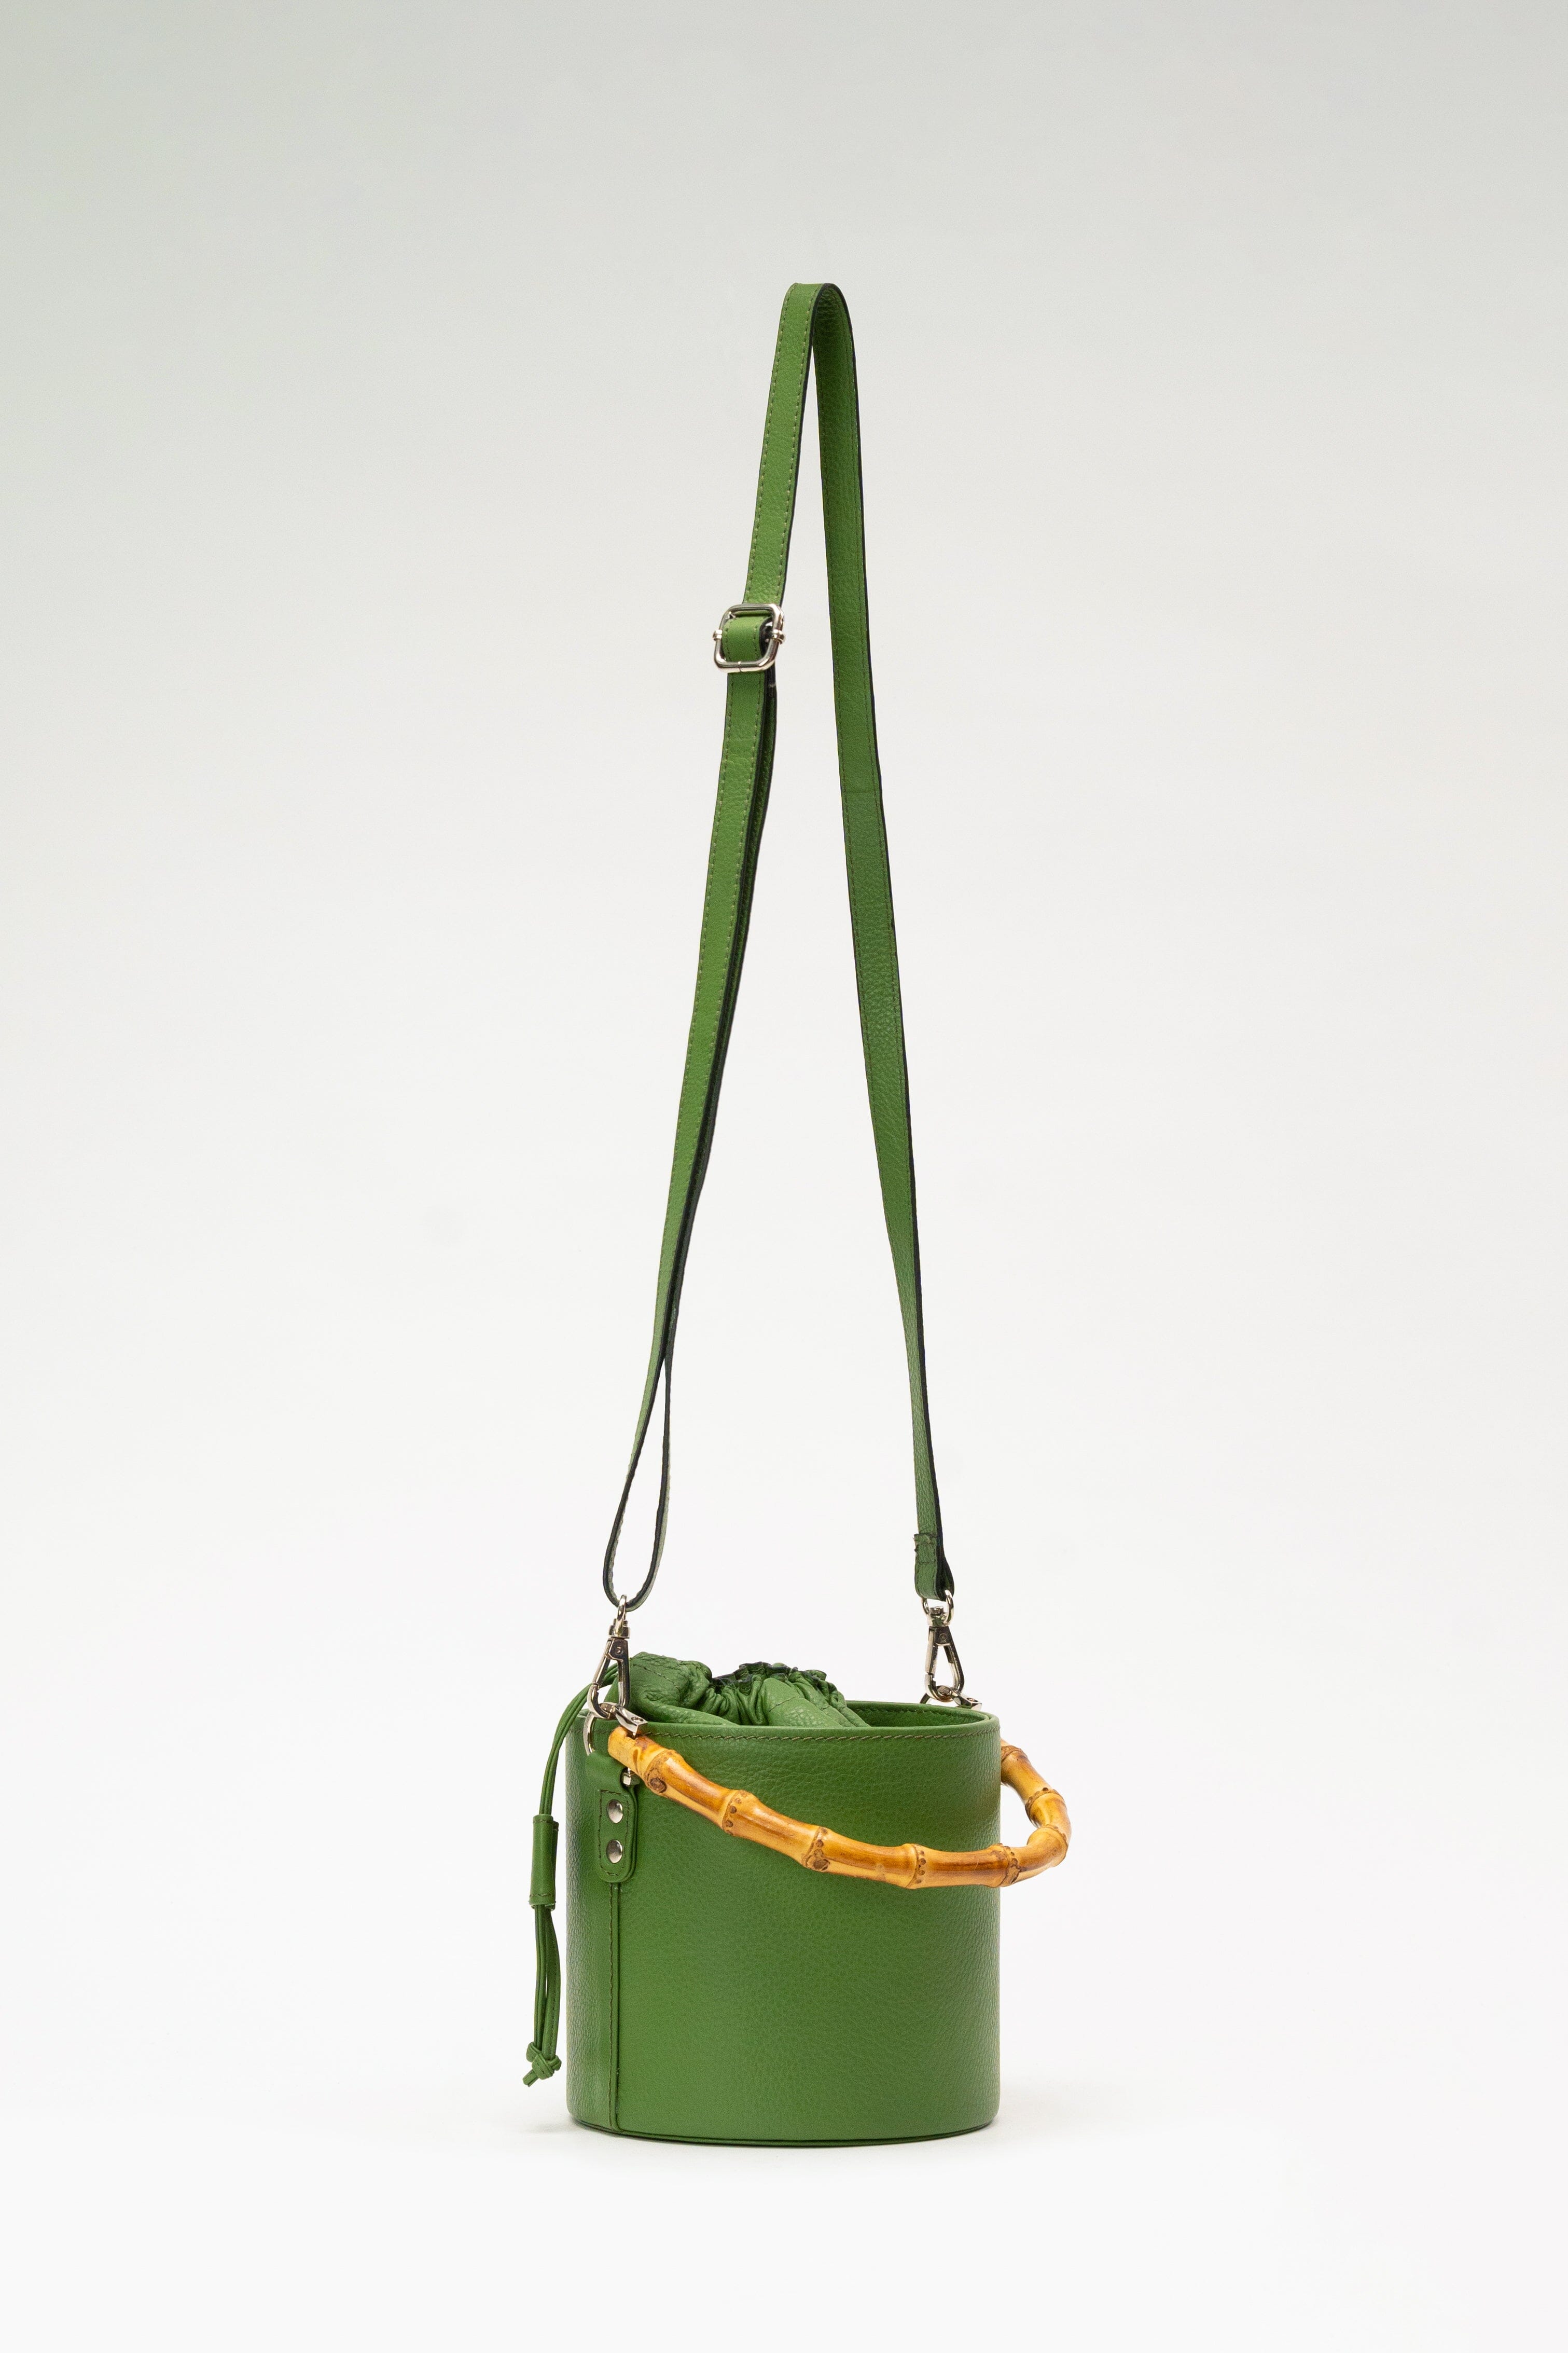 Ivy Bucket Bag in Olive